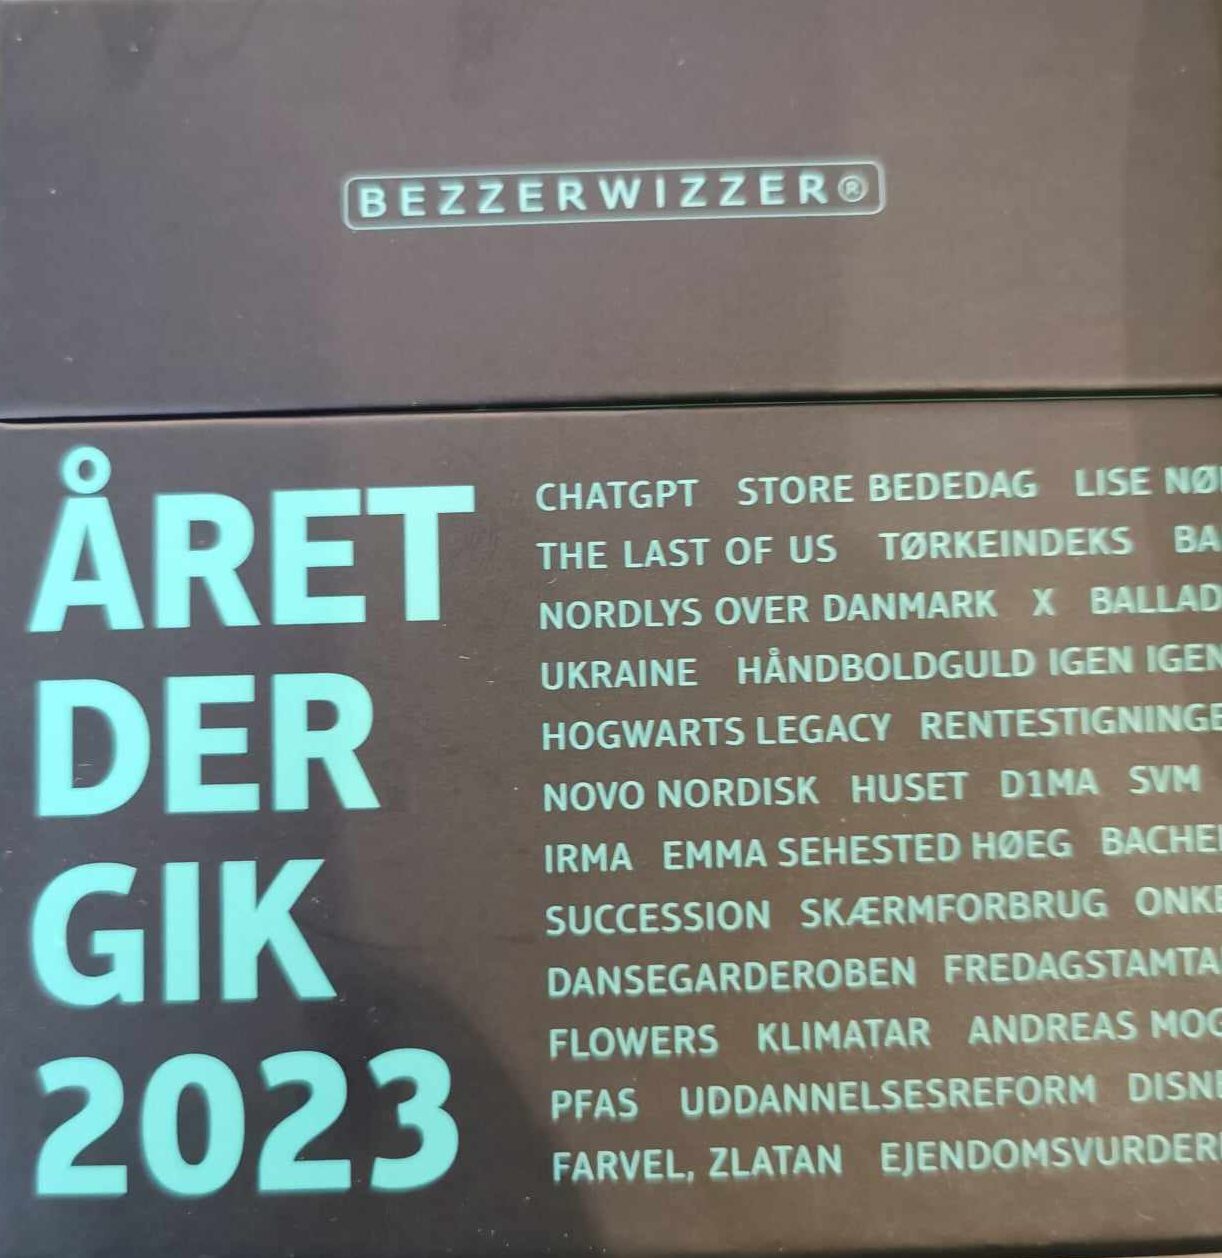 Read more about the article Bezzerwizzer: Året der gik 2023